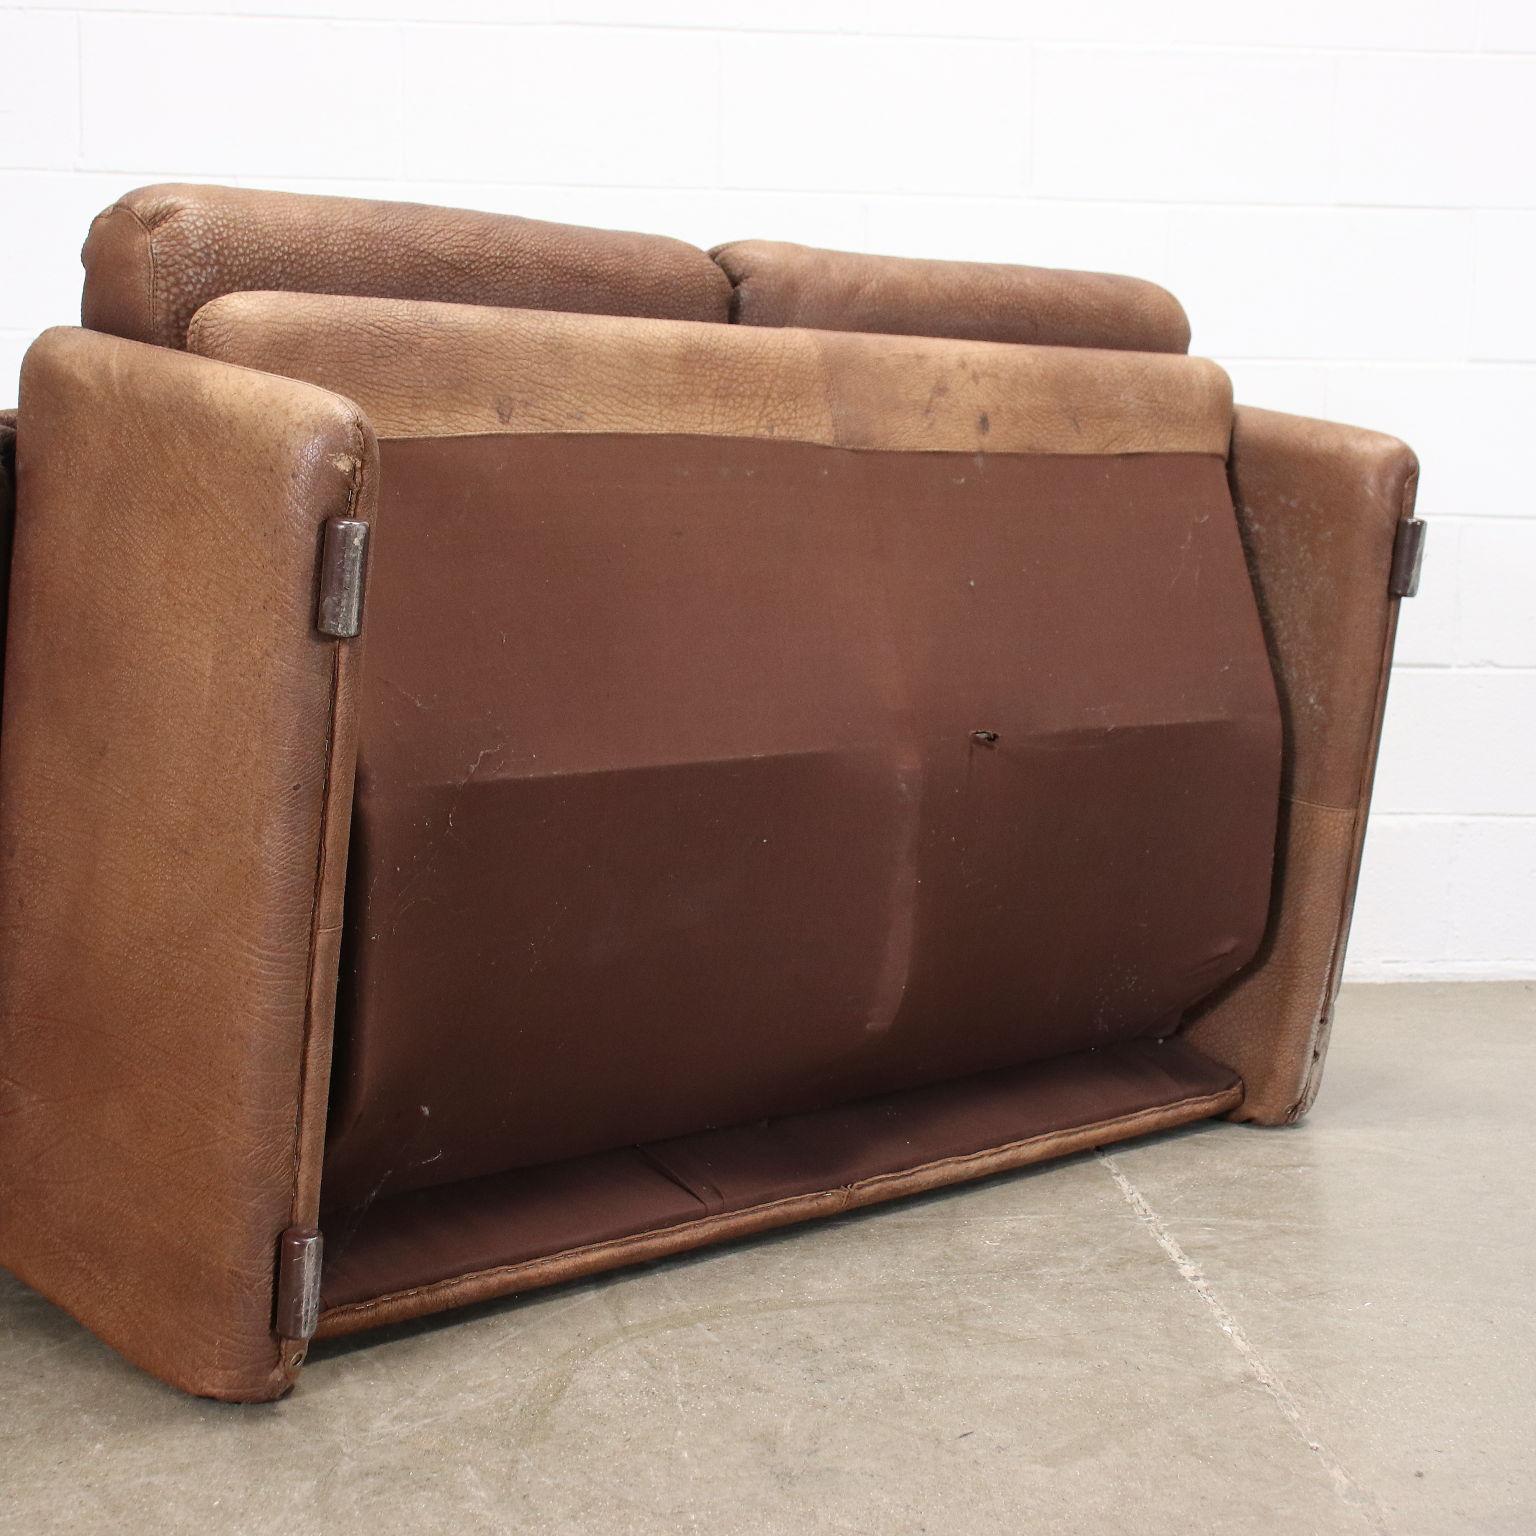 Coronado 2 Seater Sofa by B&B Foam Leather, Italy, 1970s For Sale 3